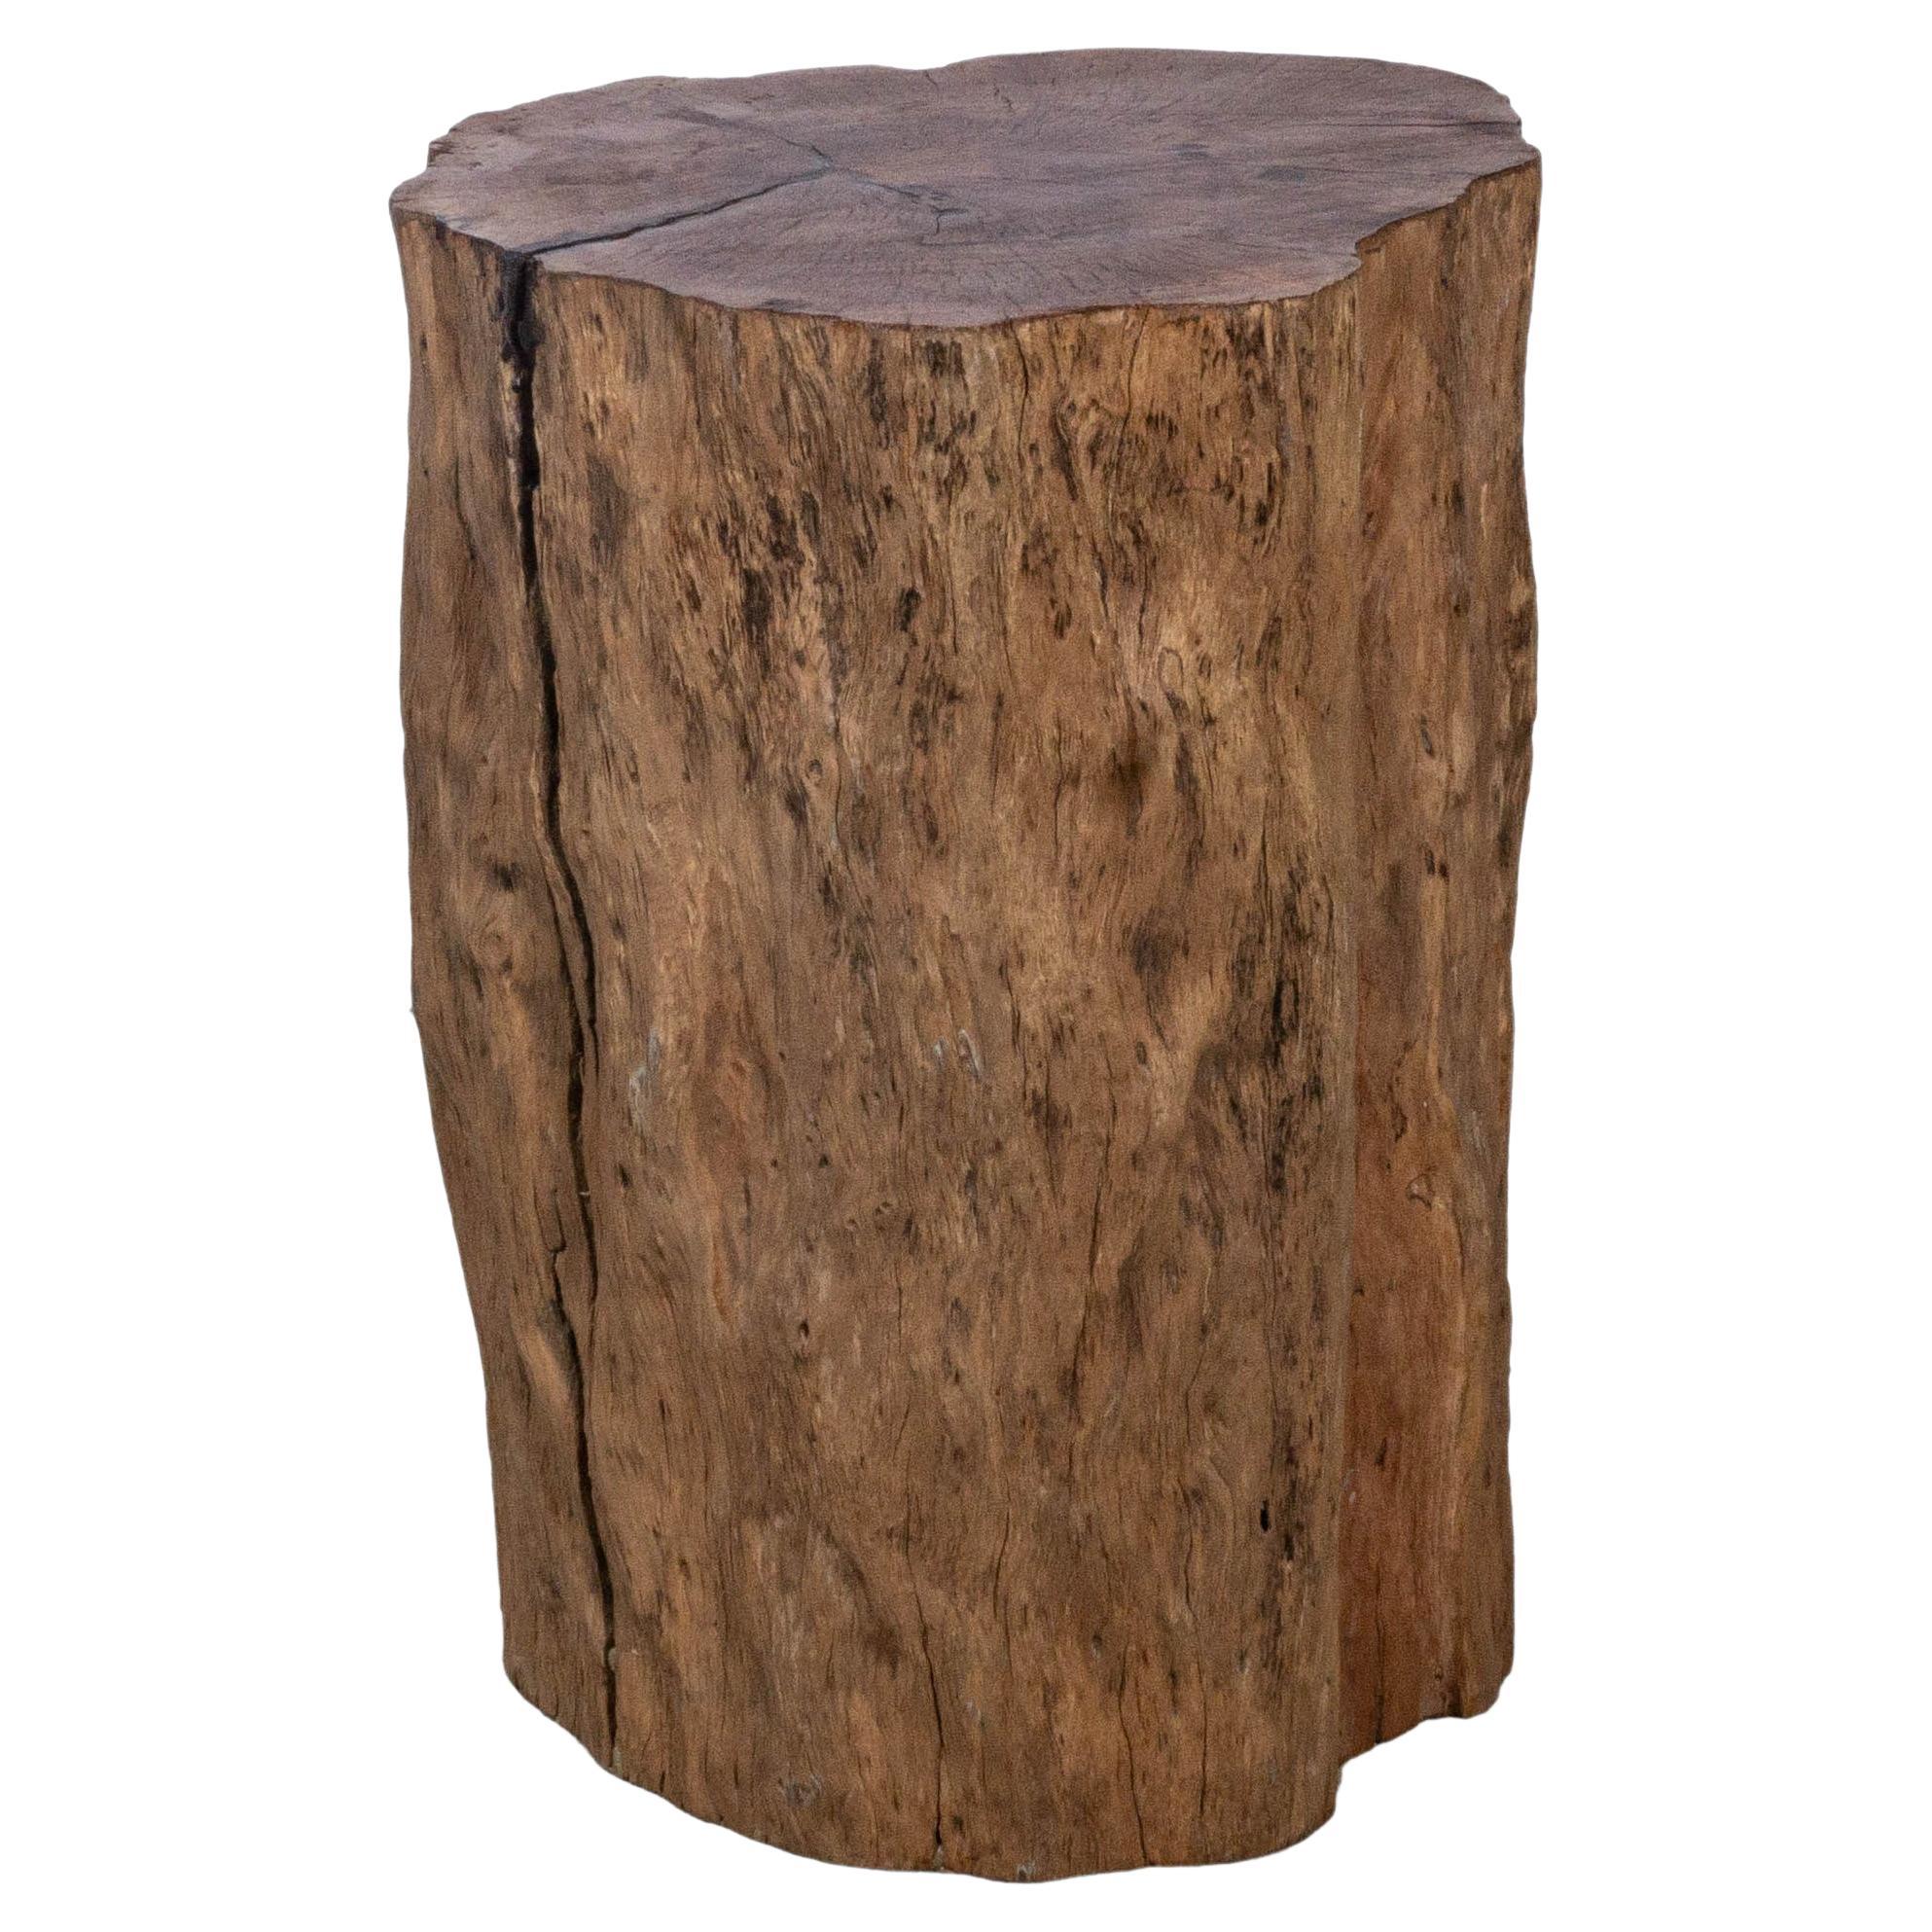 Lychee Holz Organic Form Beistelltisch